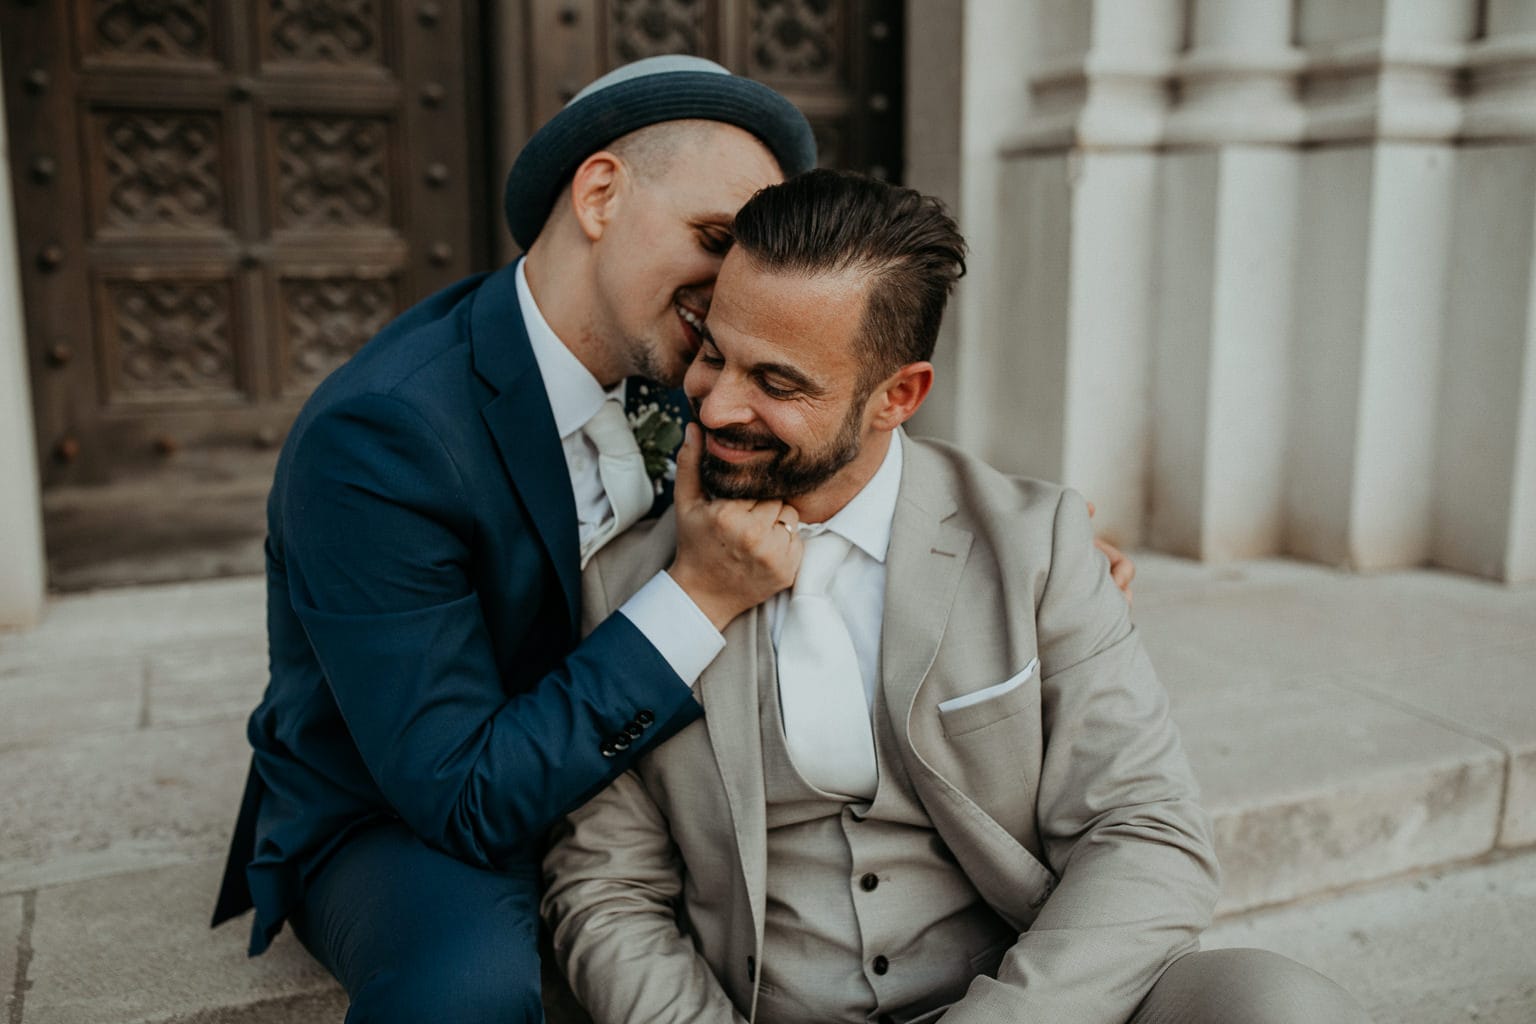 Hochzeitsfotograf Same Sex LGBTQ, Salzburg